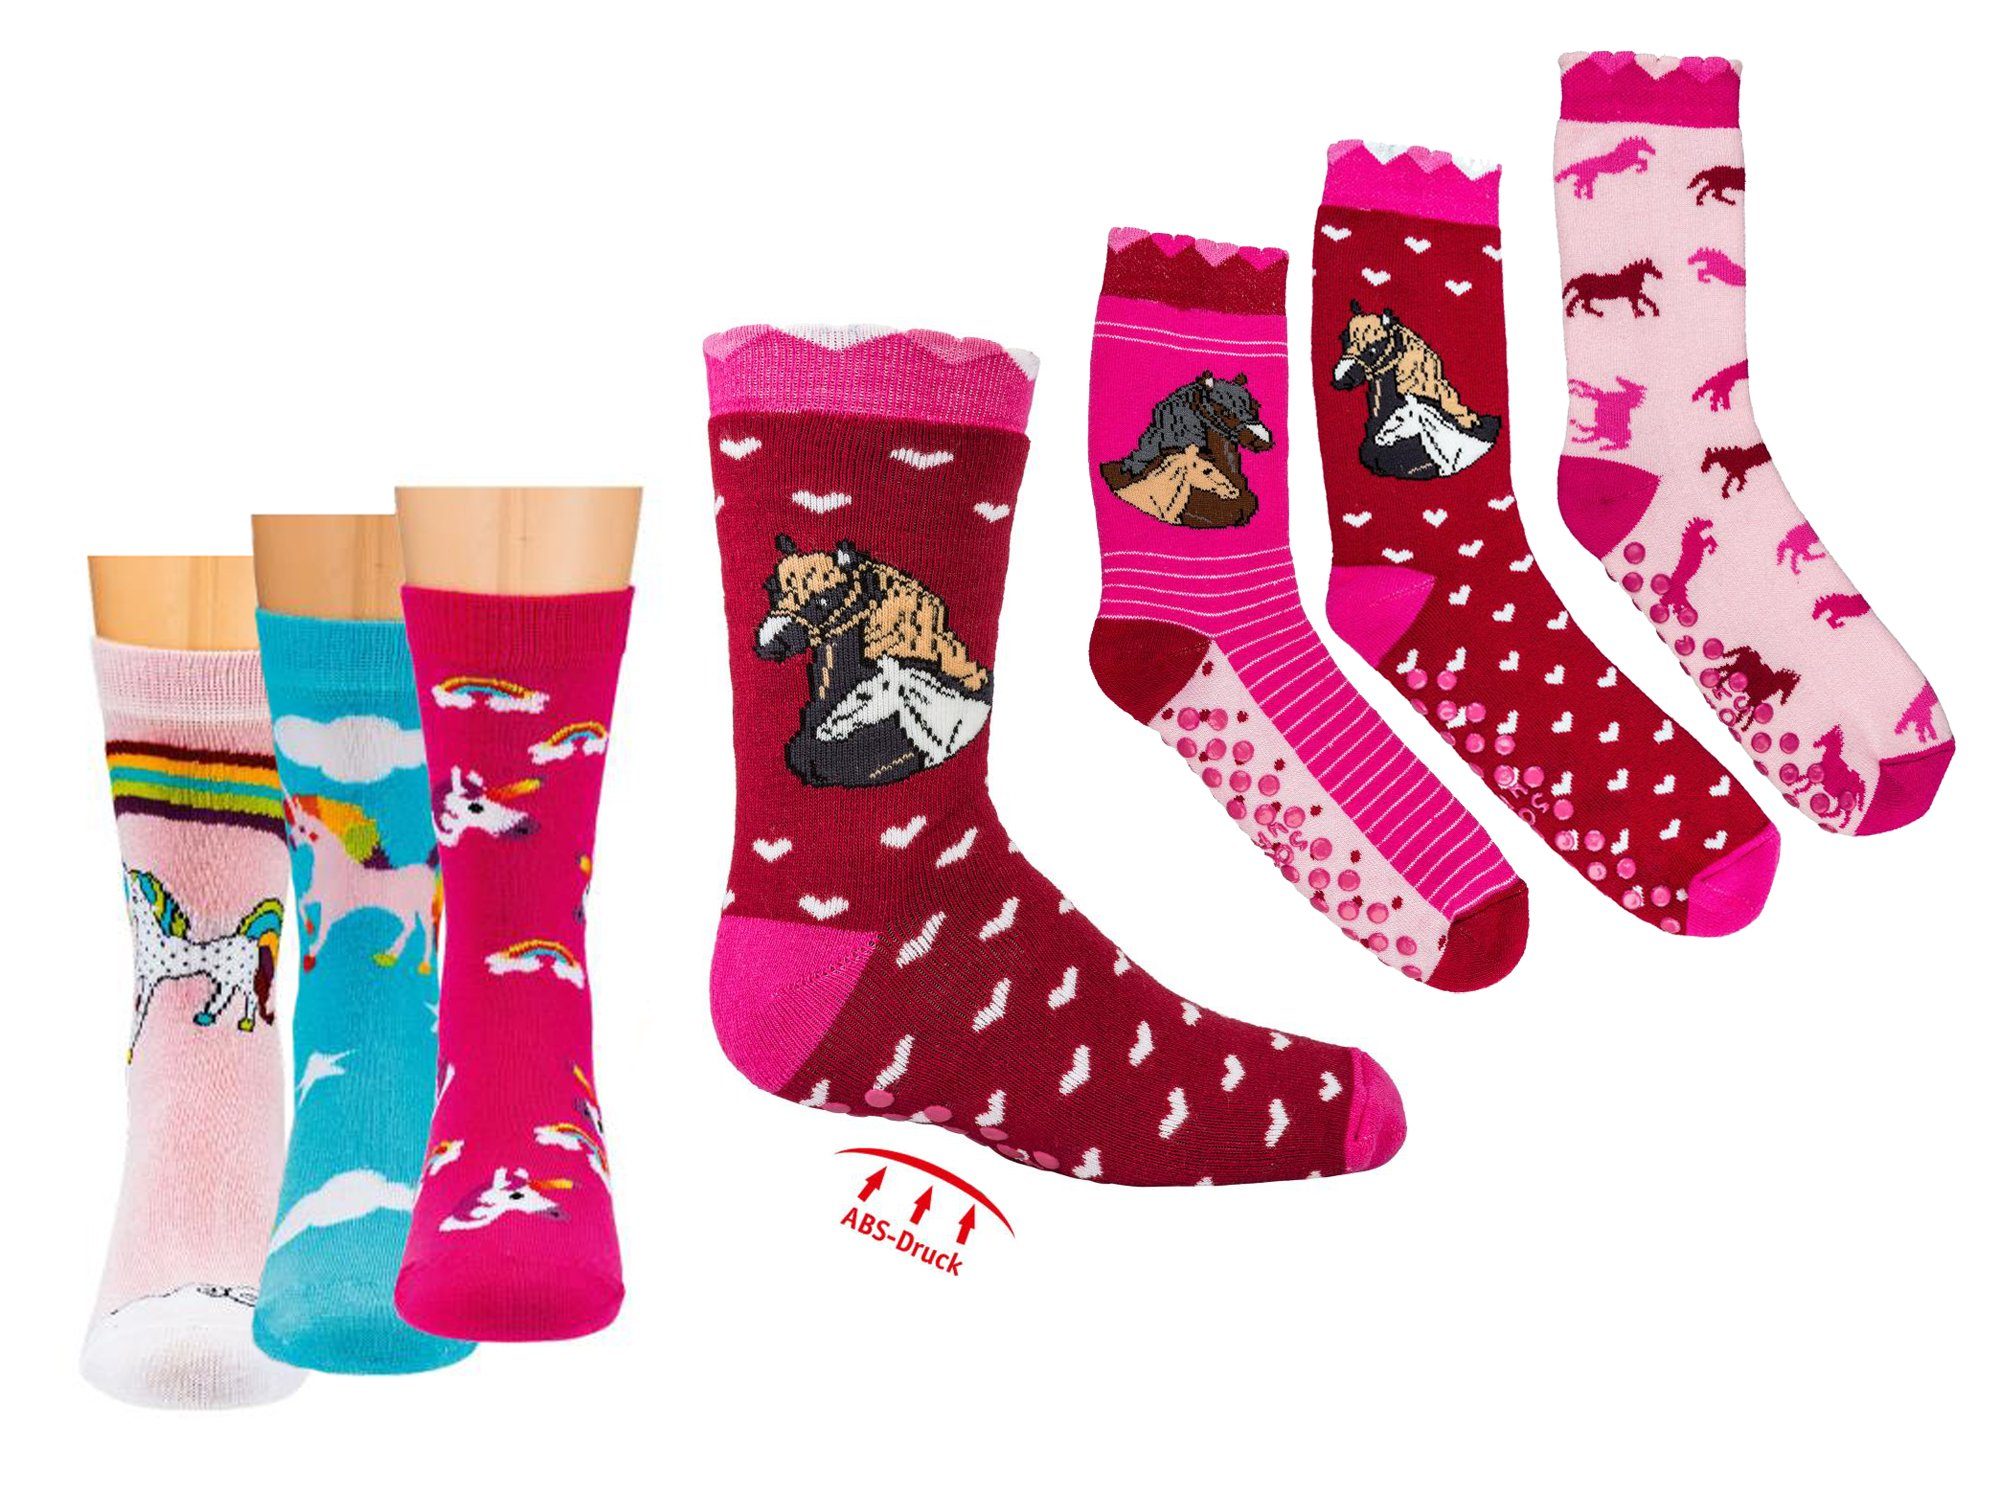 Socks 4 Fun ABS-Socken 3134 (Packung, 6-Paar, 6 Paar) ABS-Druck Kinder Socken, Jungen & Mädchen mit Baumwolle, Kindersocken